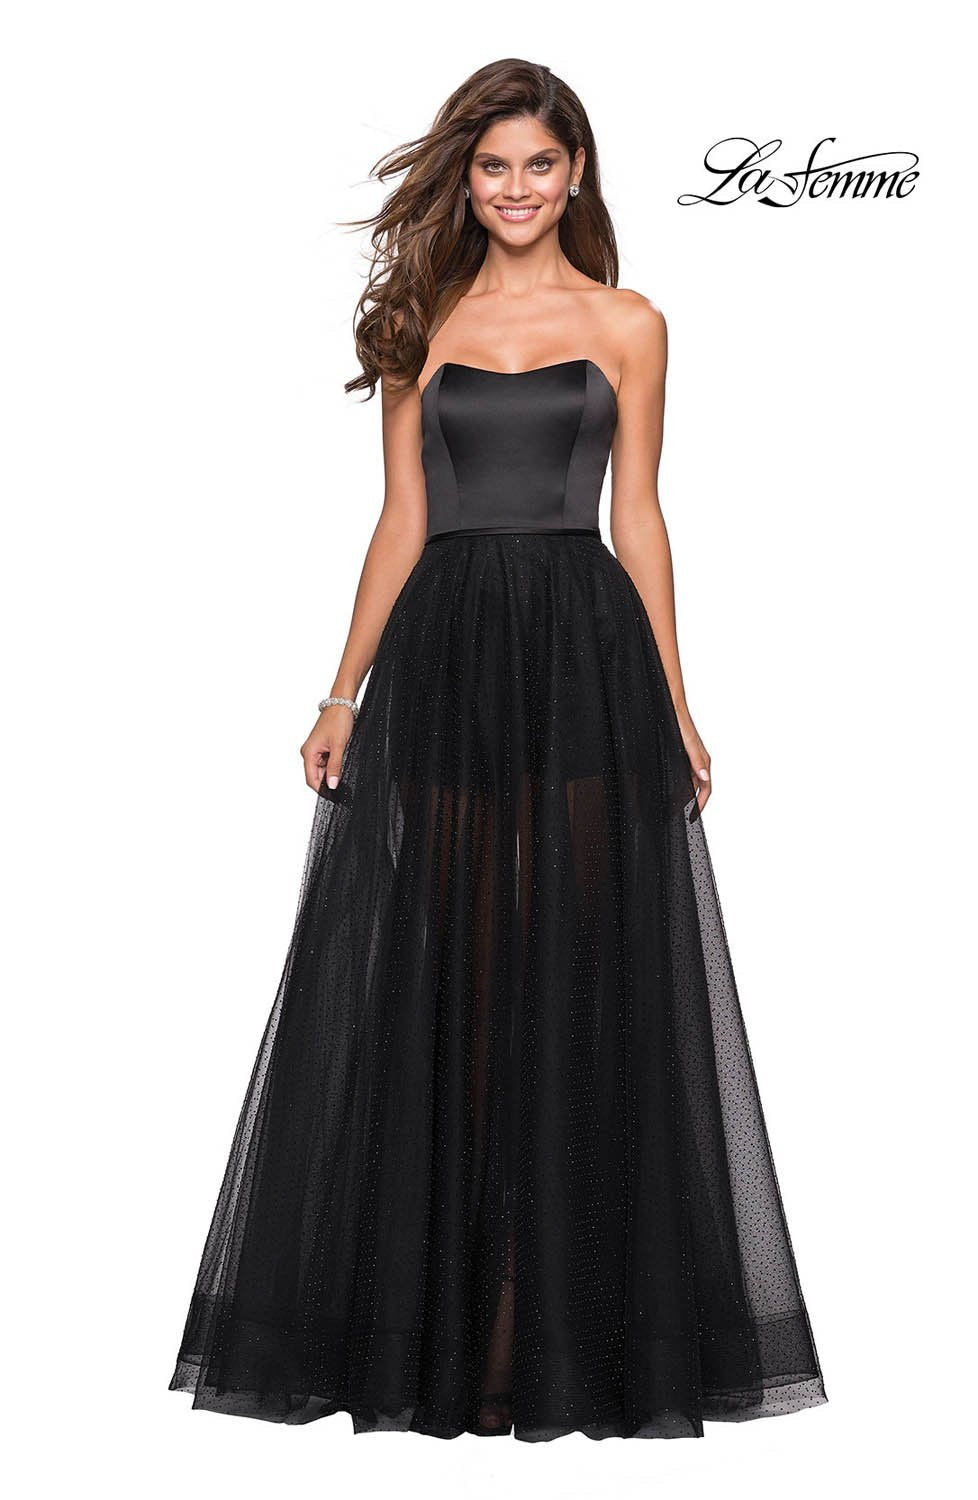 La Femme 27522 dress images in these colors: Black.